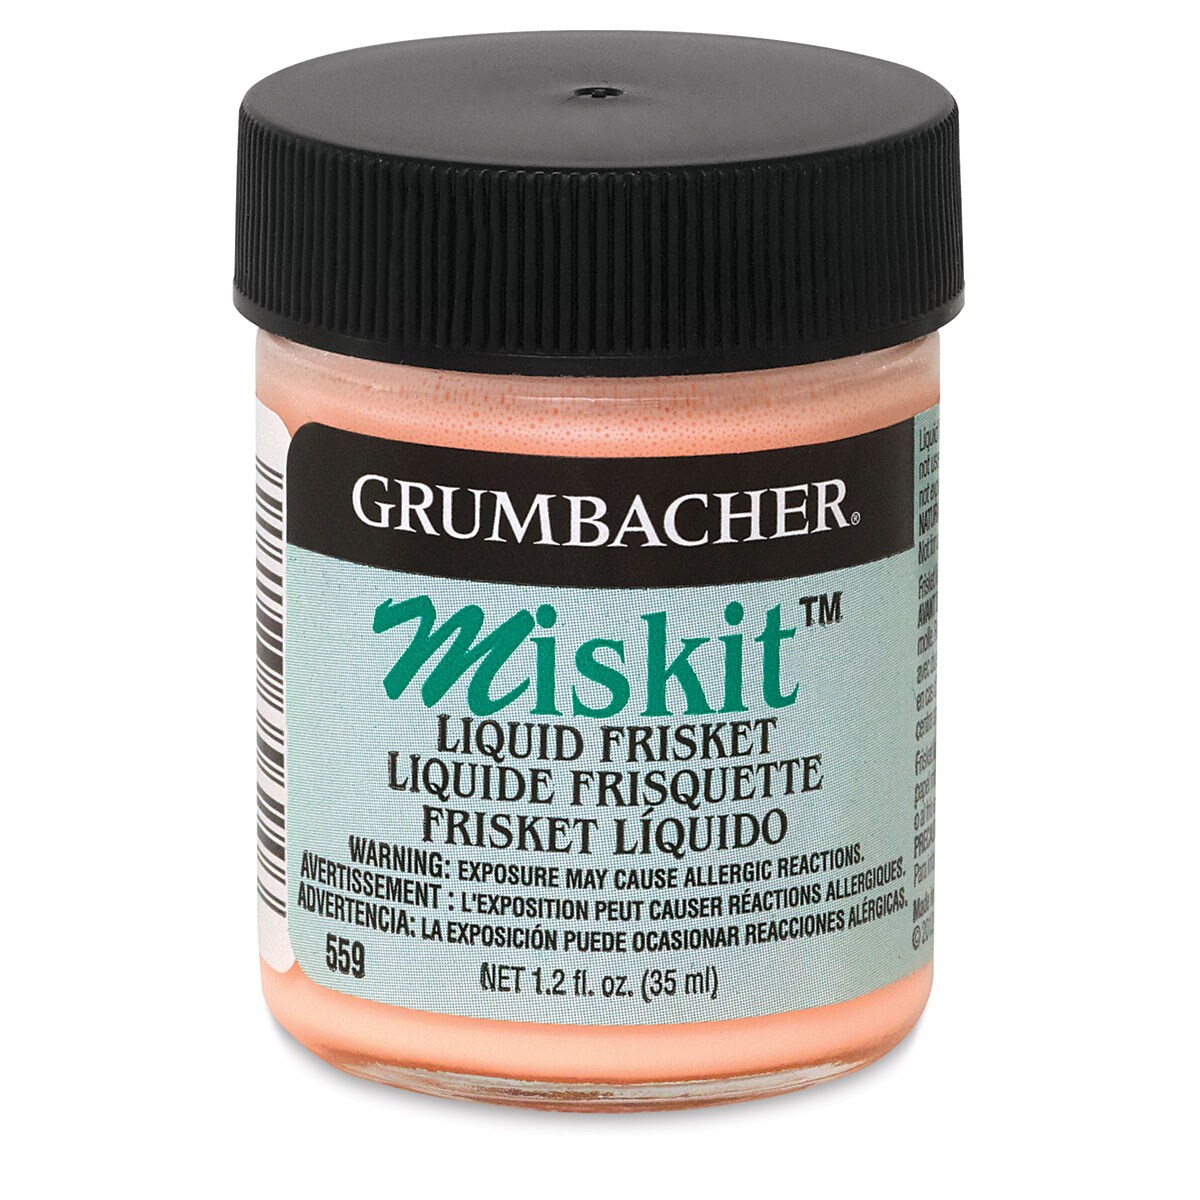 Grumbacher Miskit Friskit - 1.2 oz jar